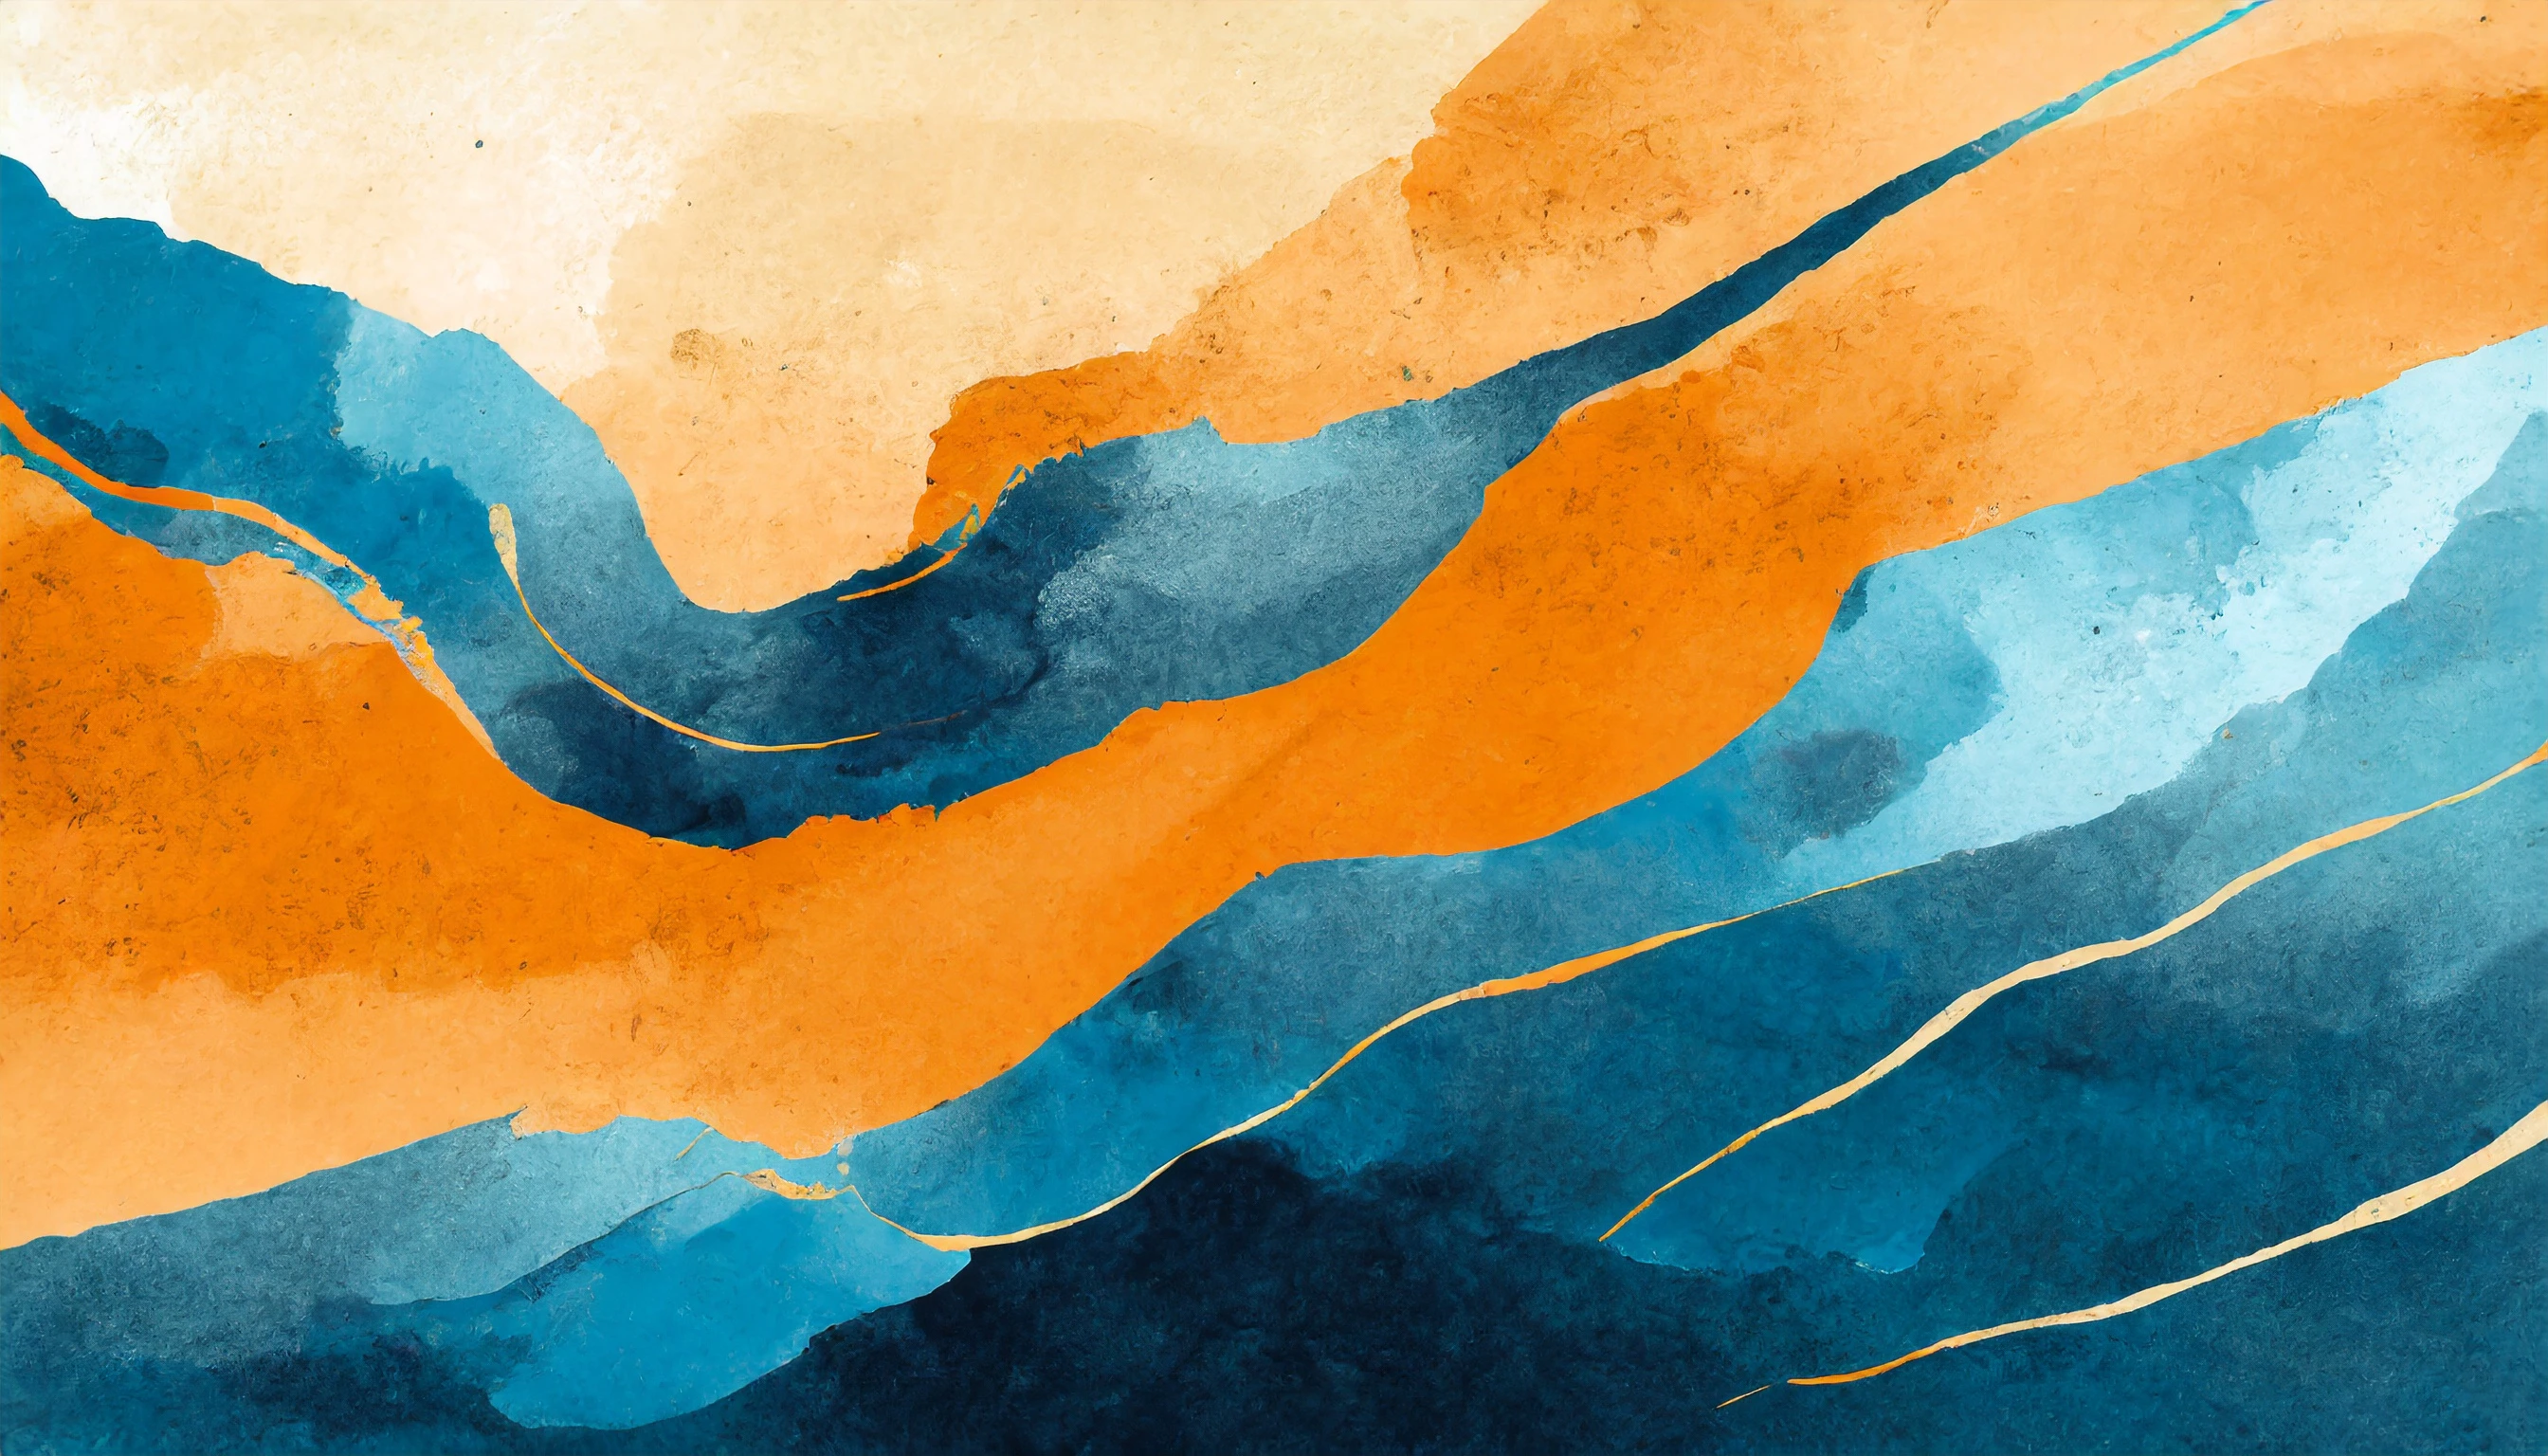 r17-firefly-blue-and-burnt-orange-abstract-art-87883-17031213636508.jpg